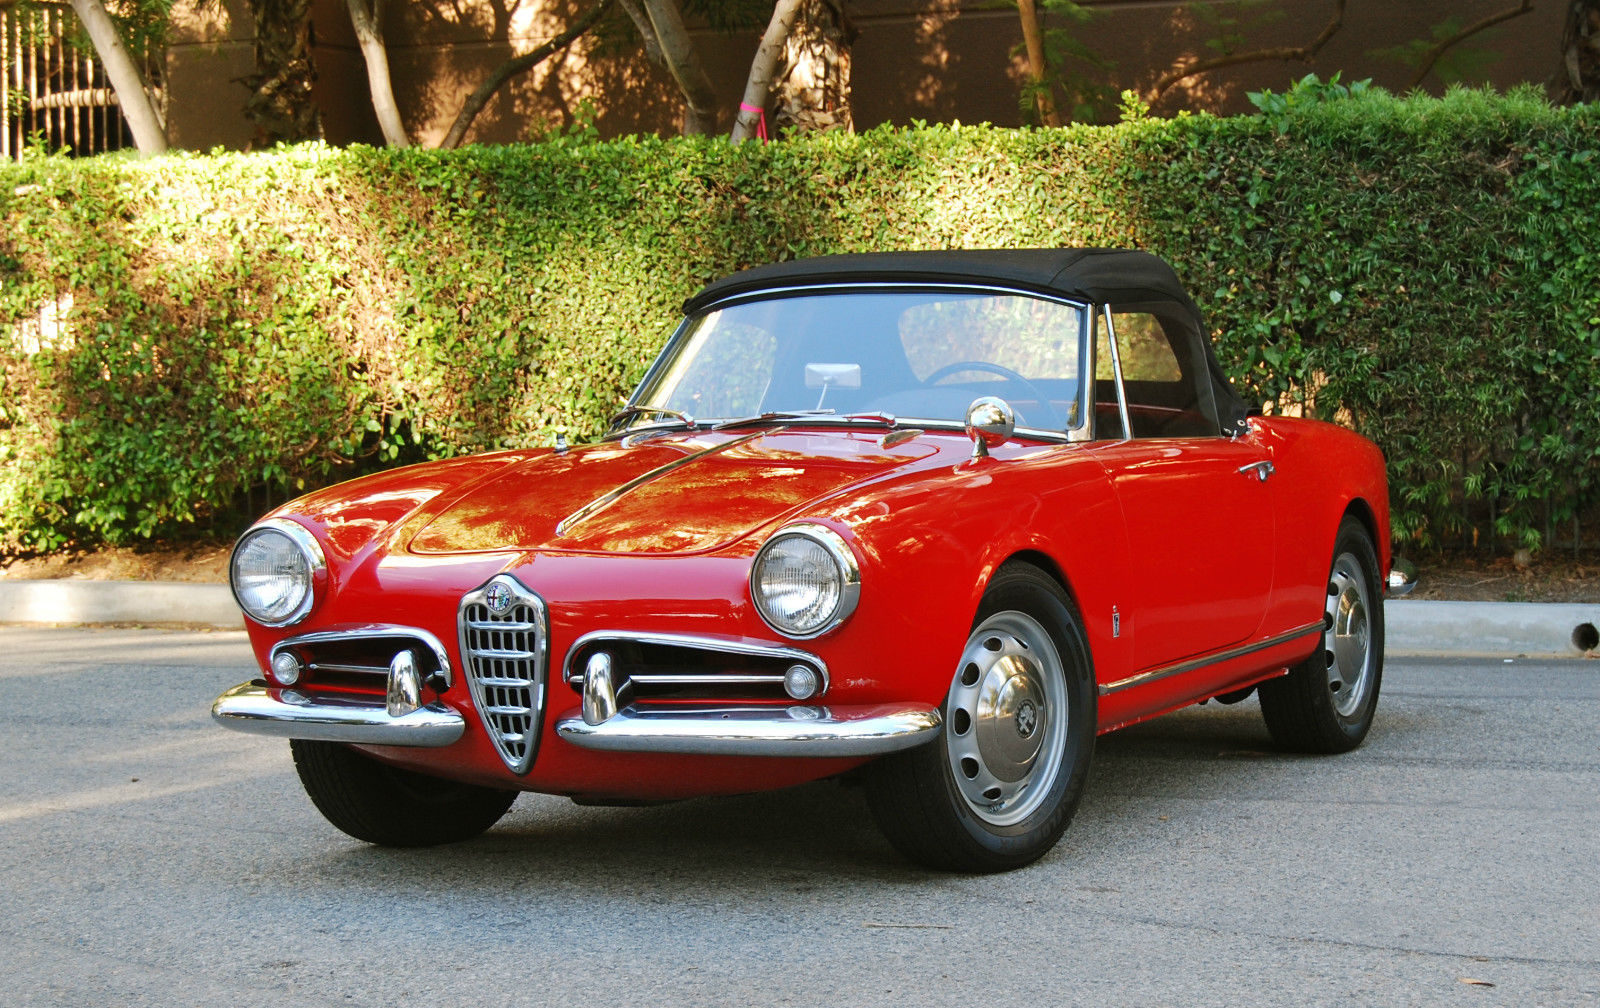 1961 Alfa Romeo Giulietta Spider, 1600cc, 5-speed, absolute rust-free